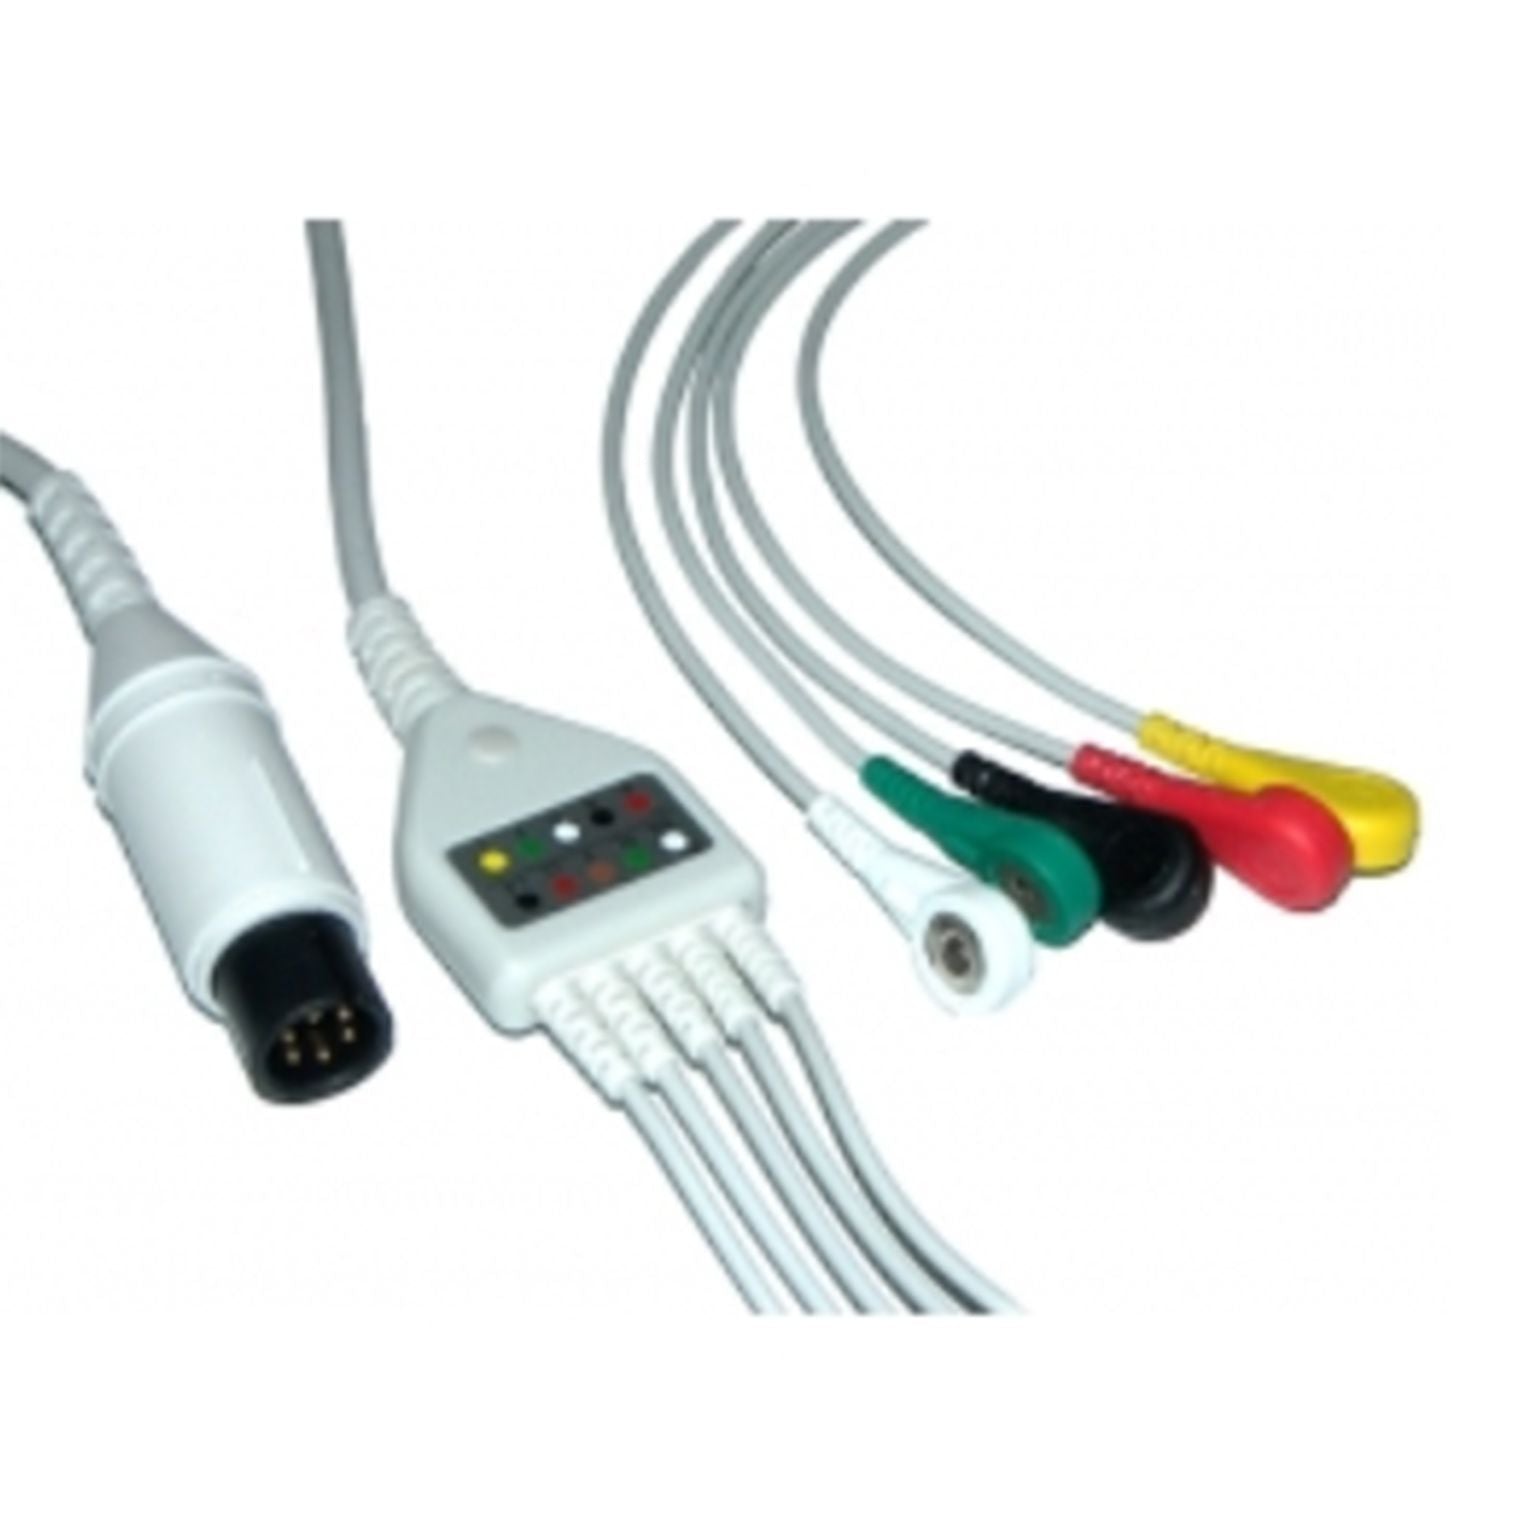 Edan iM20 ECG Lead Lengthened Wires